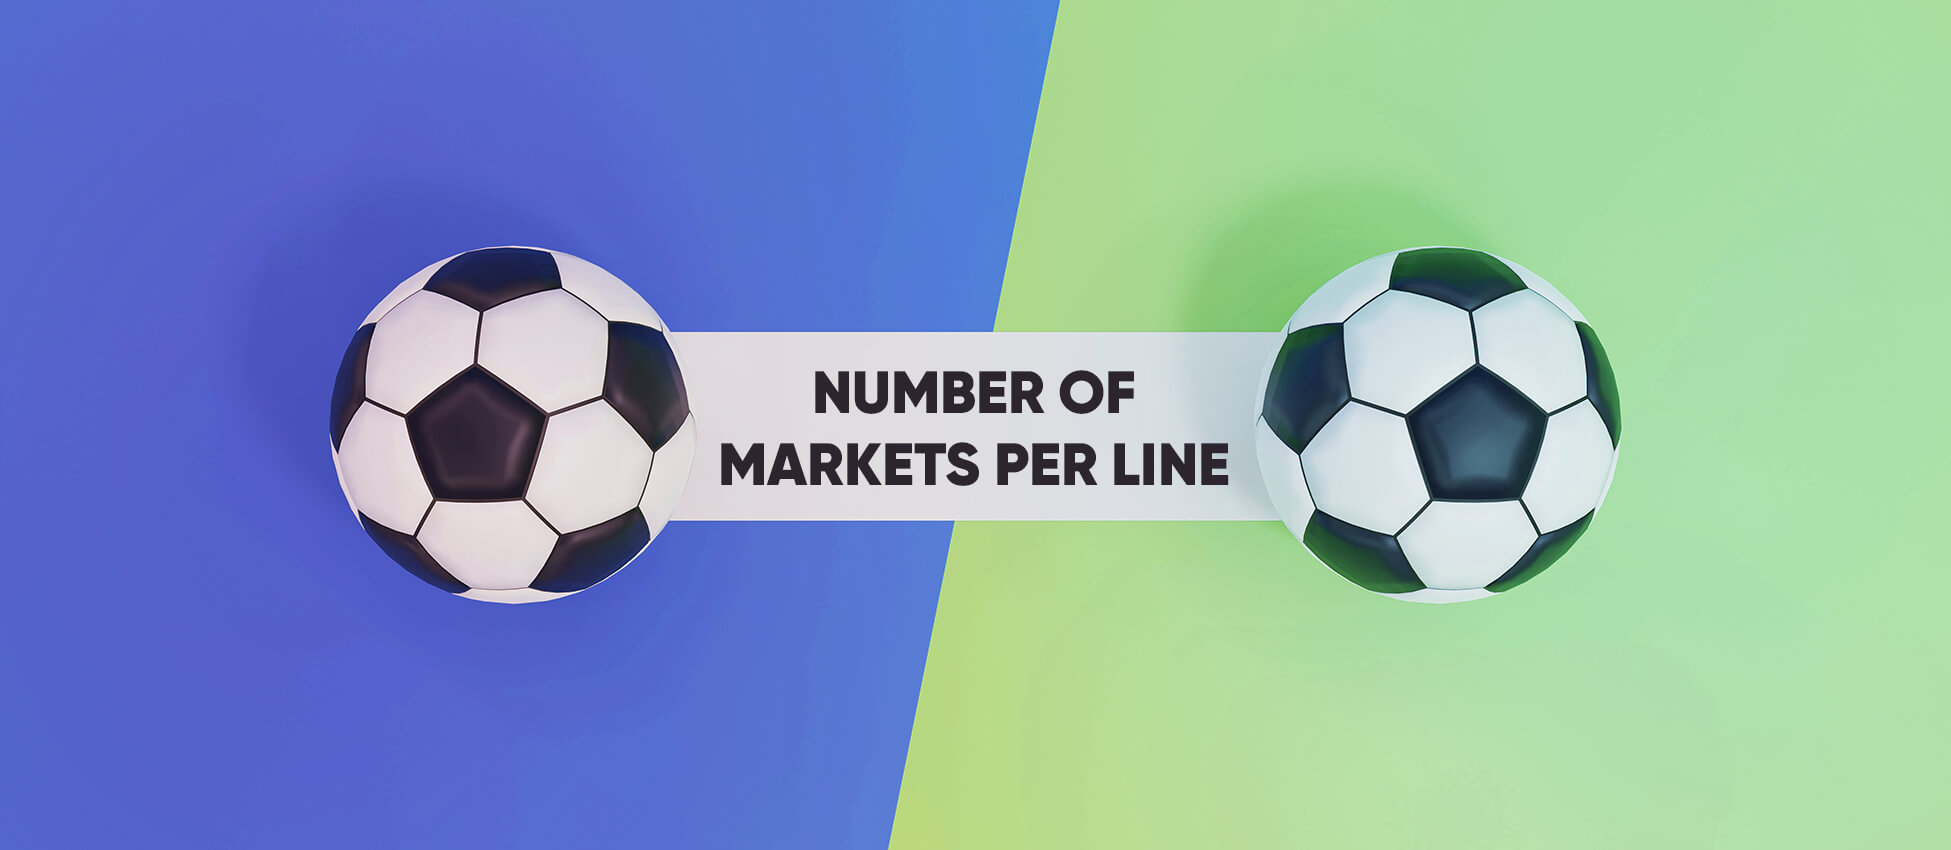 Number of markets per line